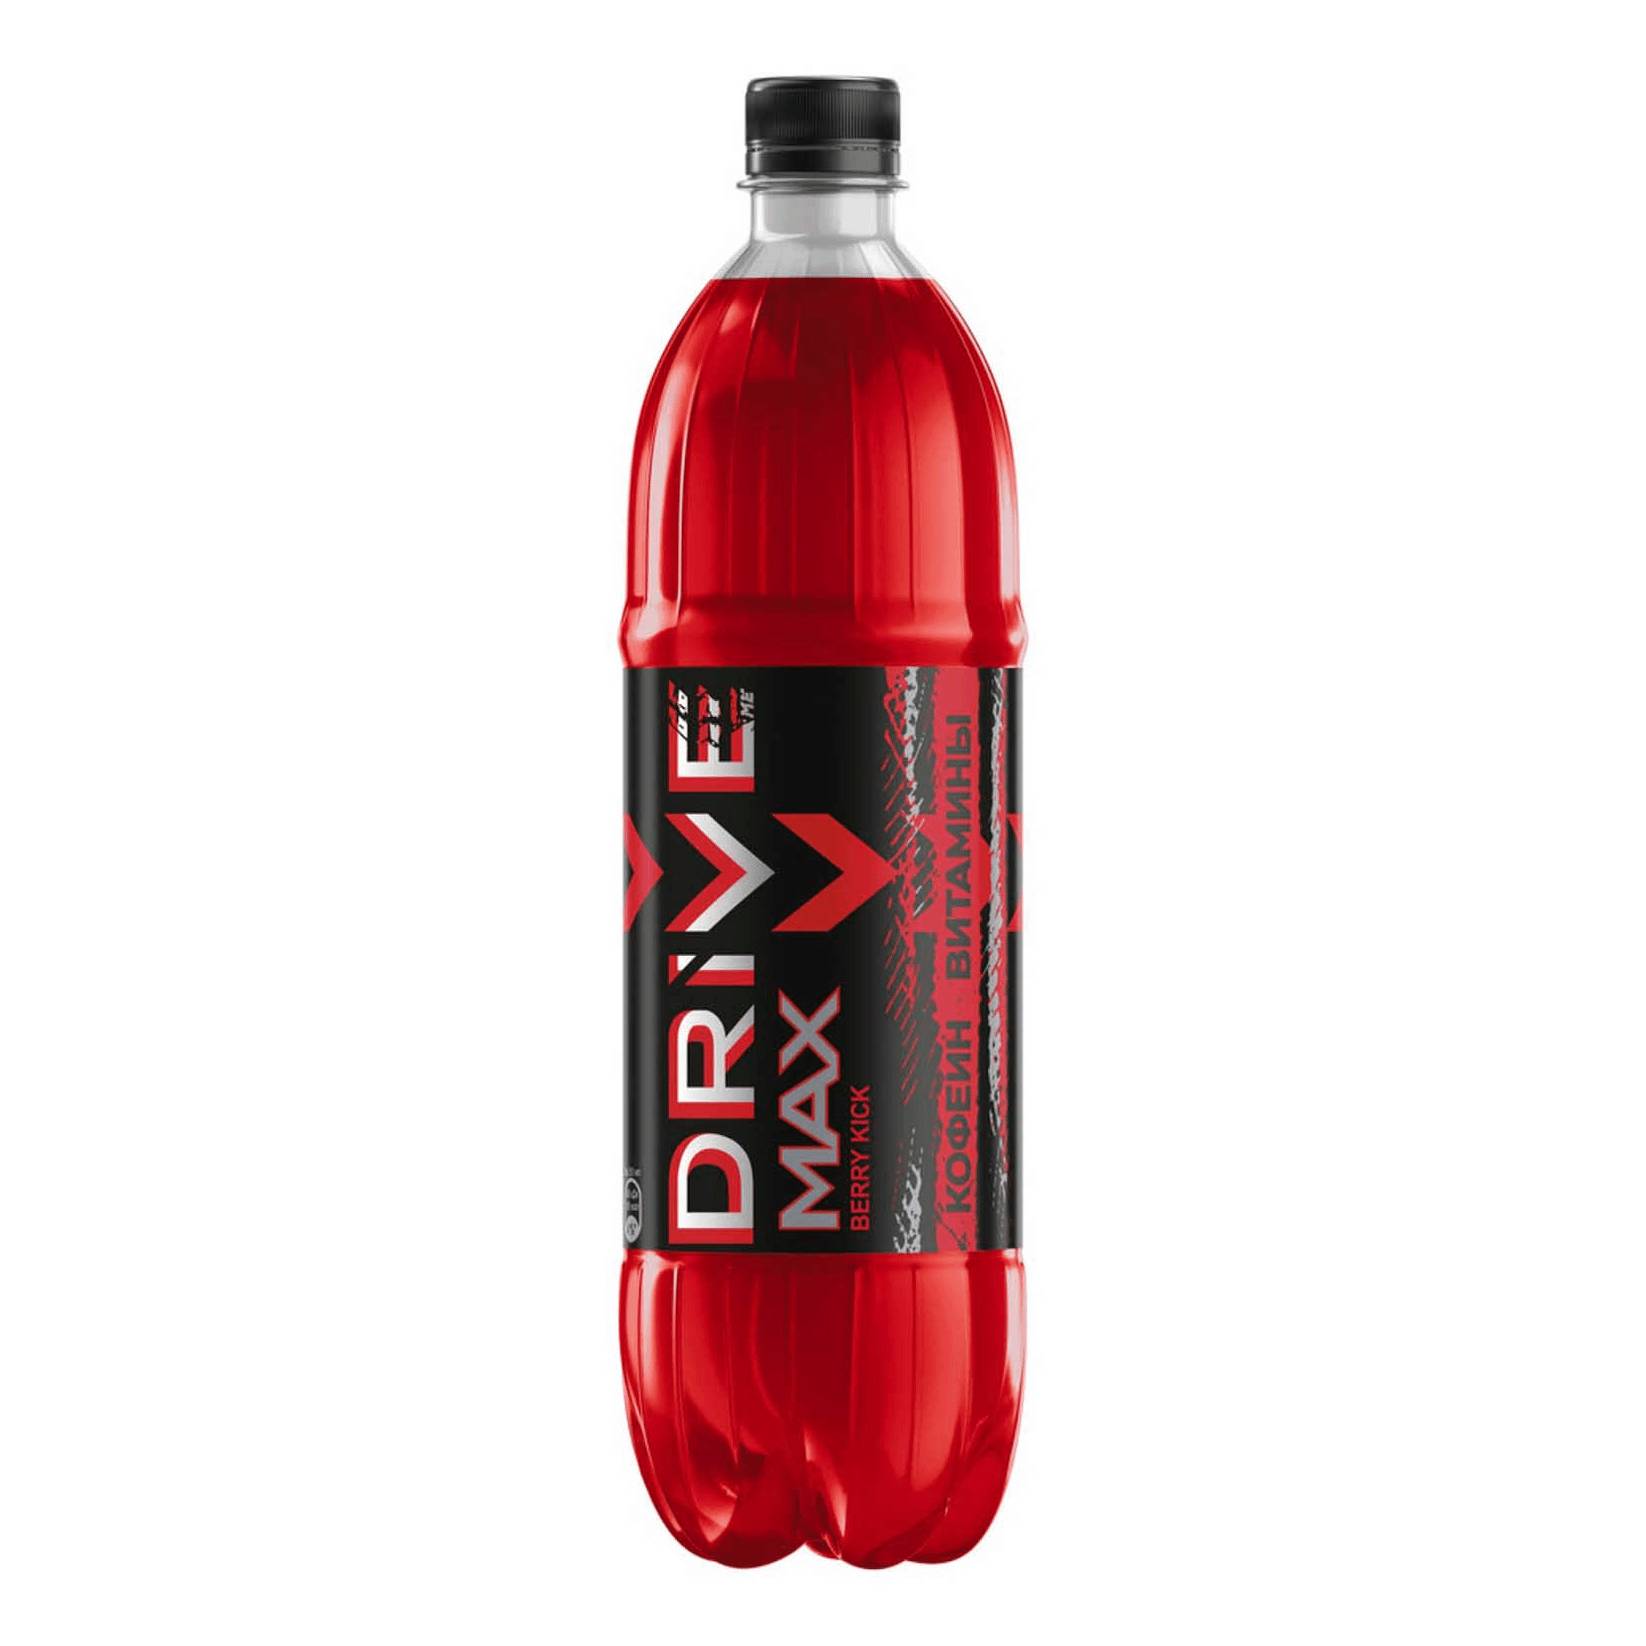 Напиток энергетический Drive Me Max ягоды, 1 л энергетический напиток drive me original 0 449 литра ж б 6 шт в уп